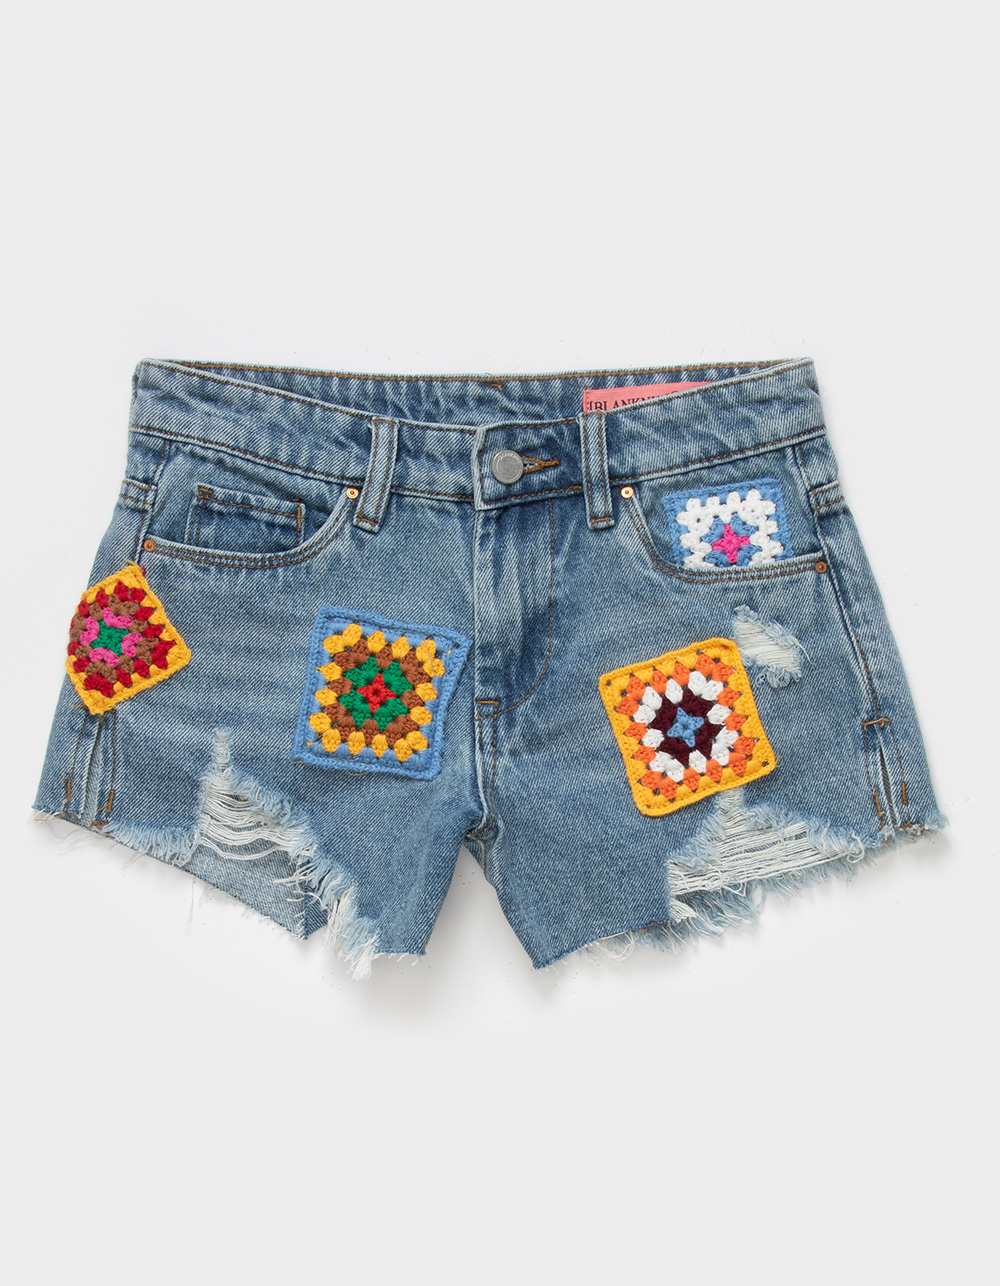 BLANK NYC Crochet Girls Shorts